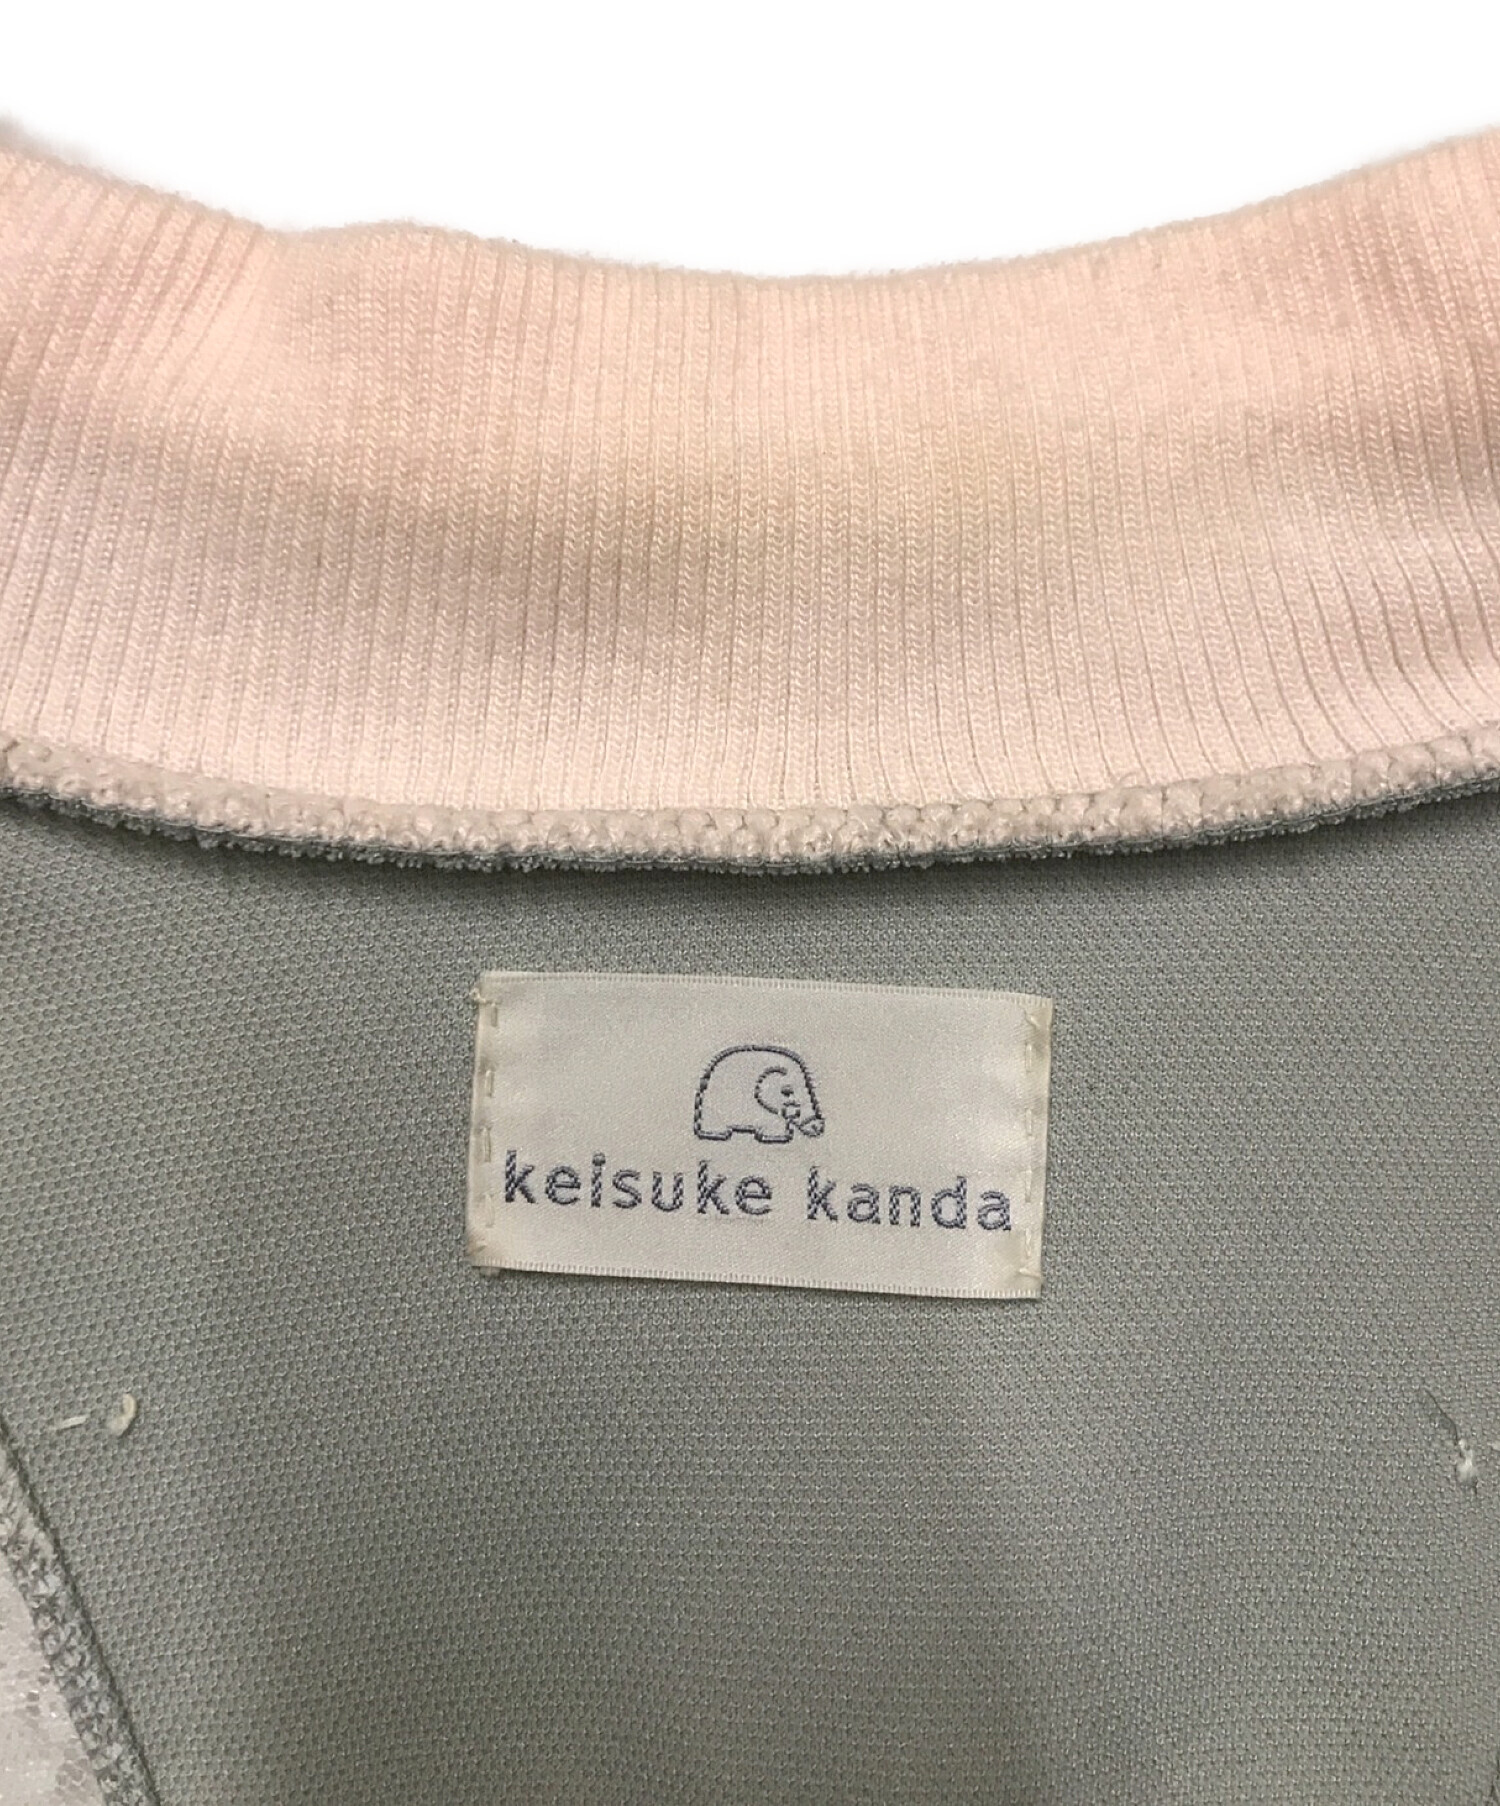 keisuke kanda (ケイスケカンダ) ぶかぶかレースの手縫いジャージ グレー サイズ:FREE